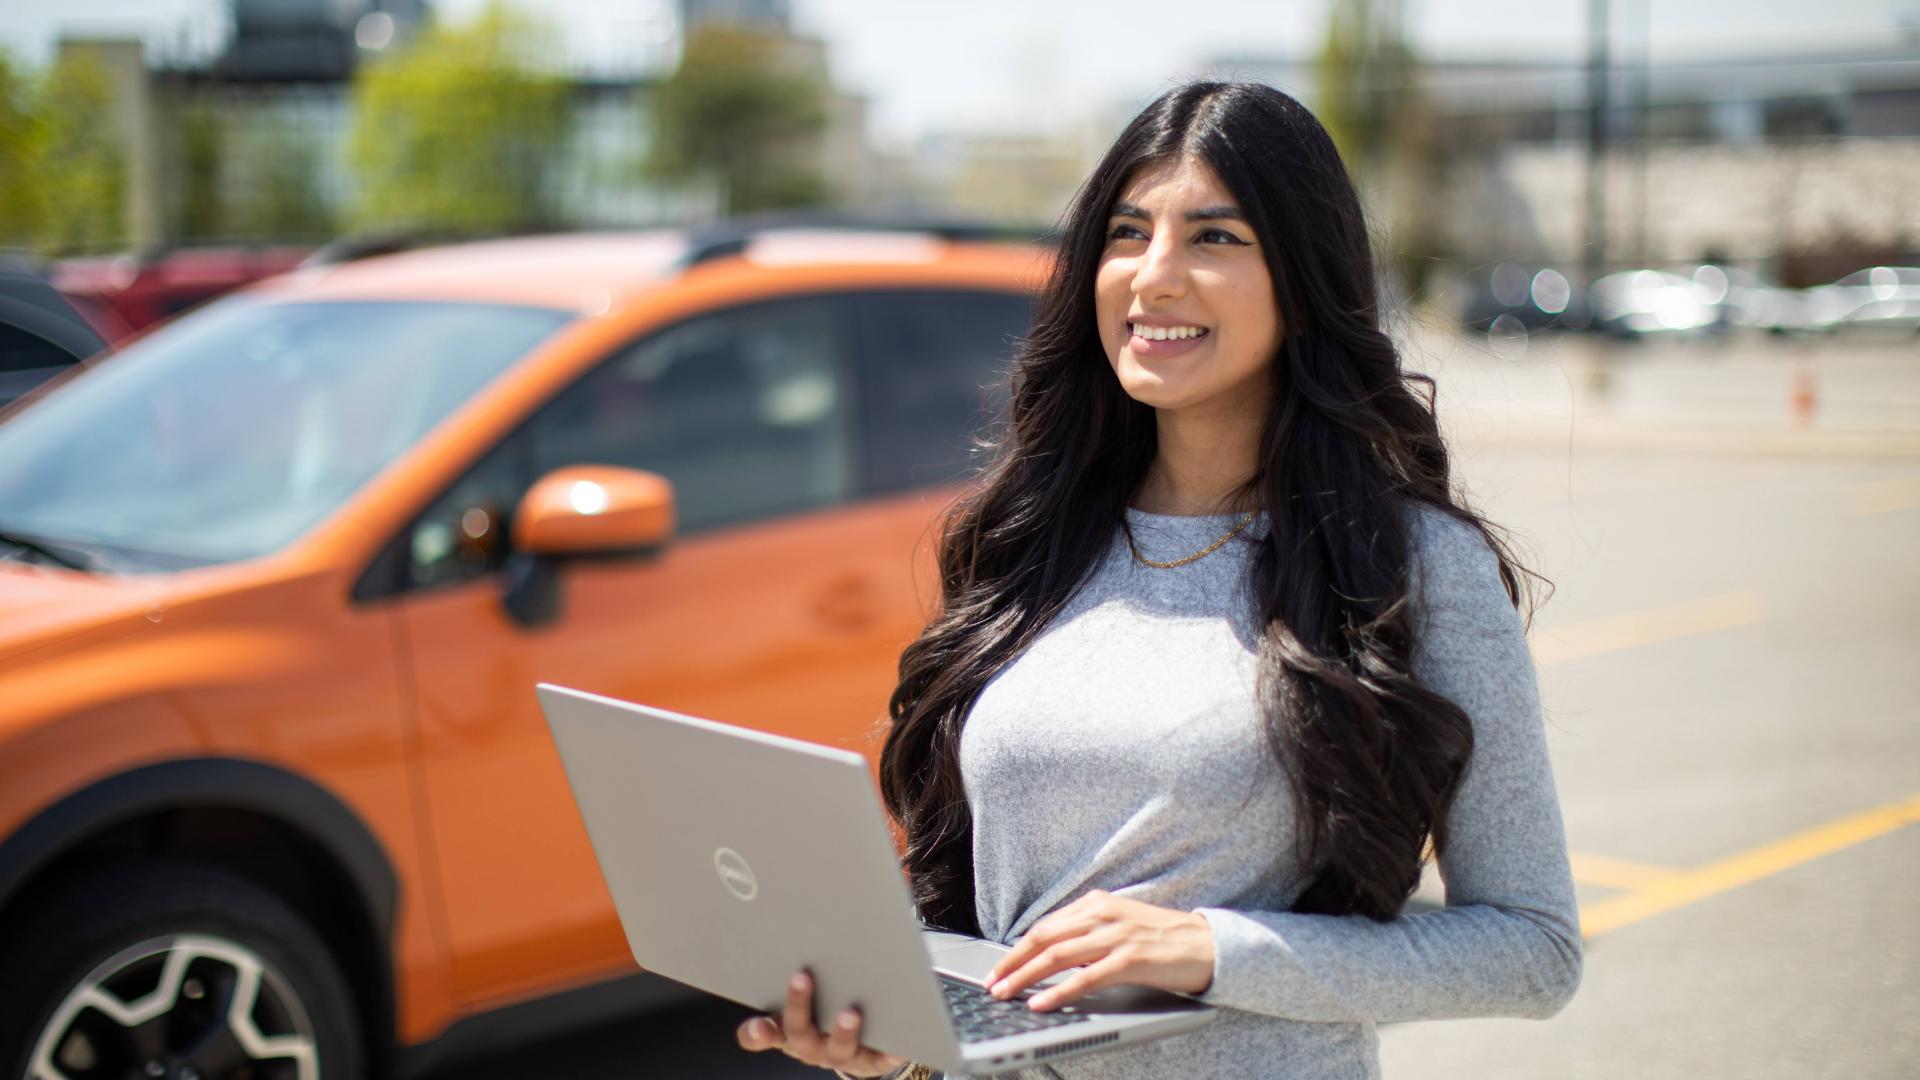 Kiranvir Kaur standing in front of an orange car, holding a laptop